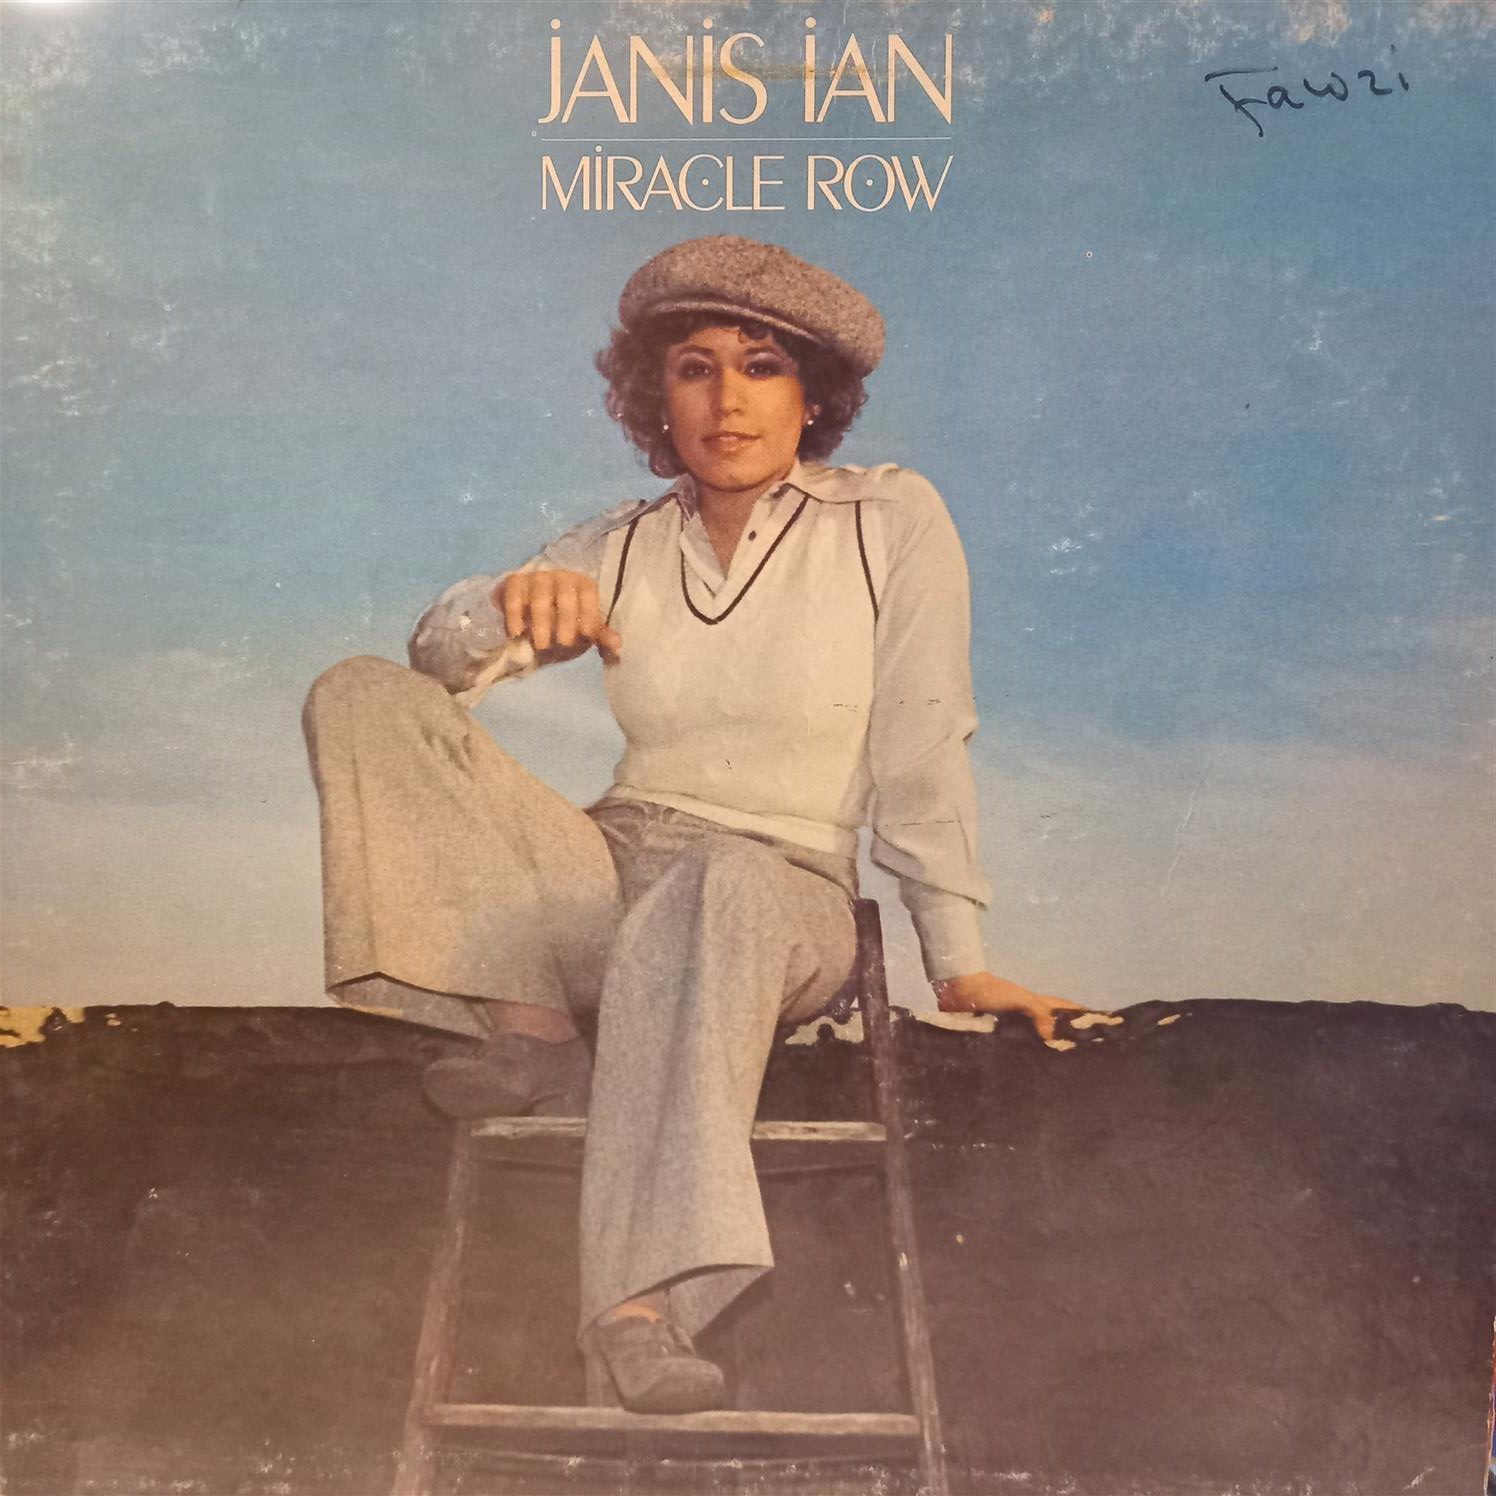 JANIS IAN – MIRACLE ROW ON